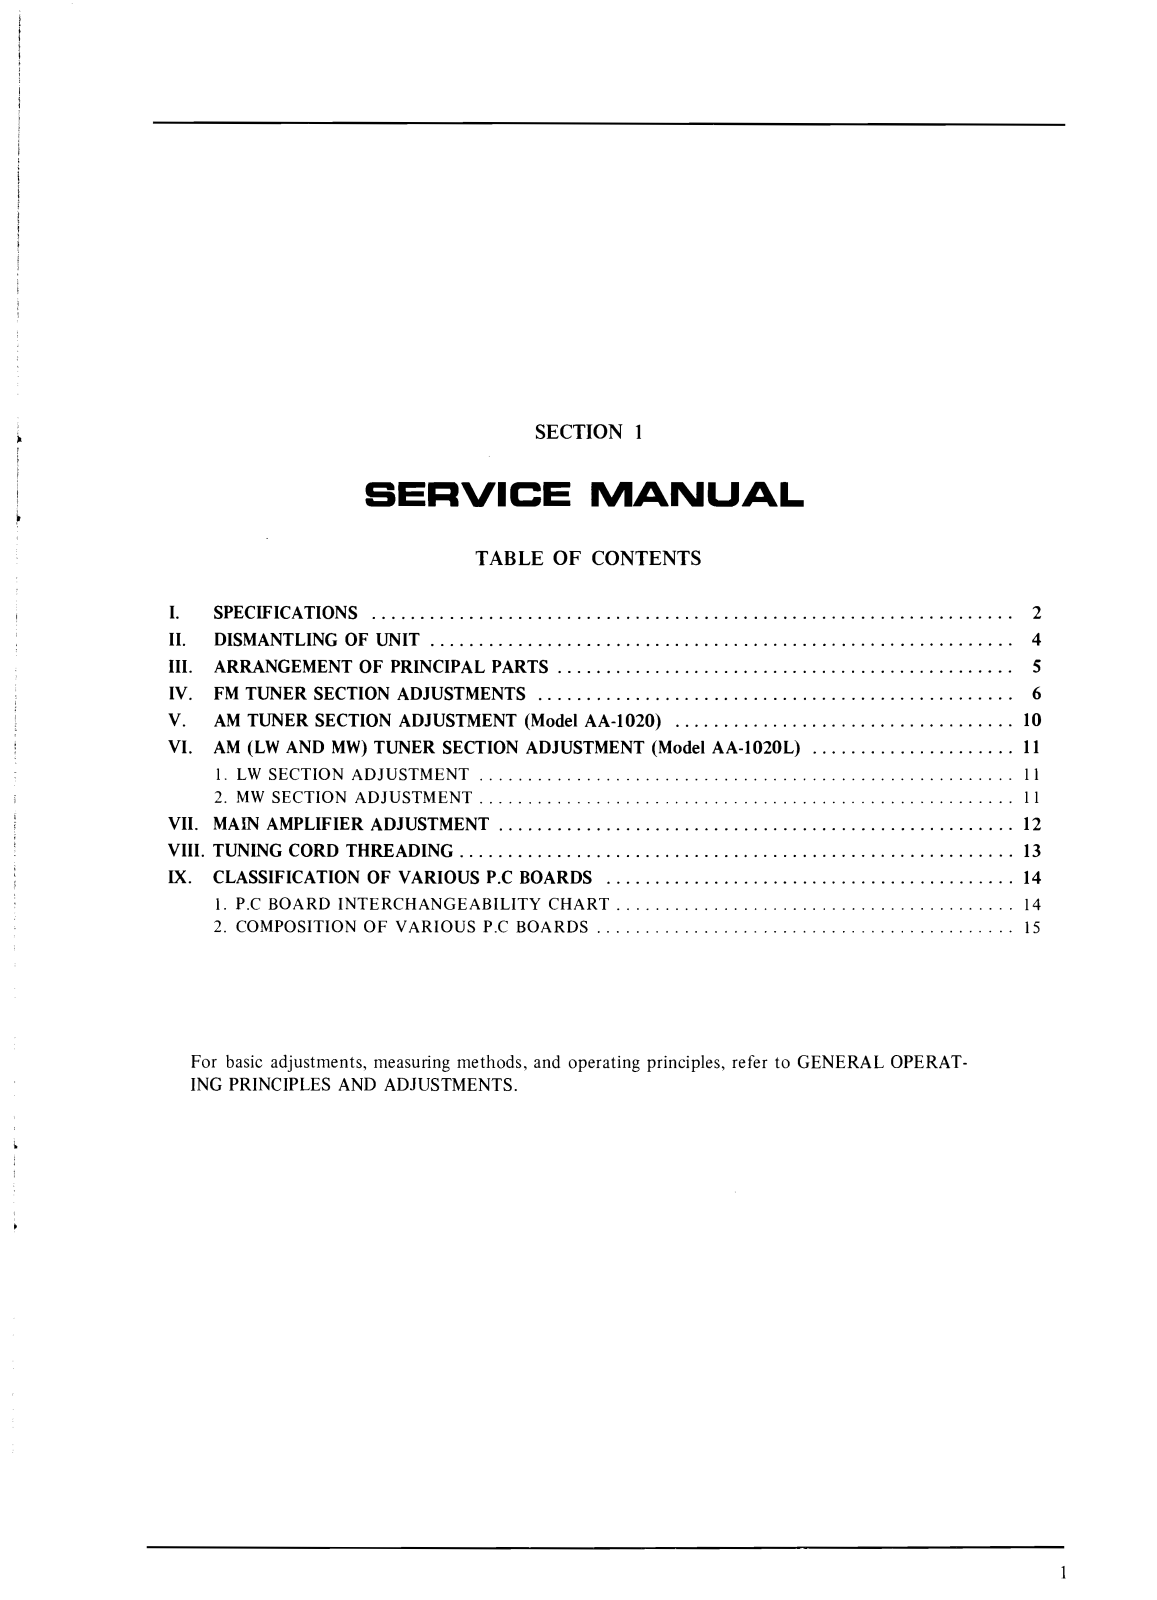 Akai AM-1020 Service Manual